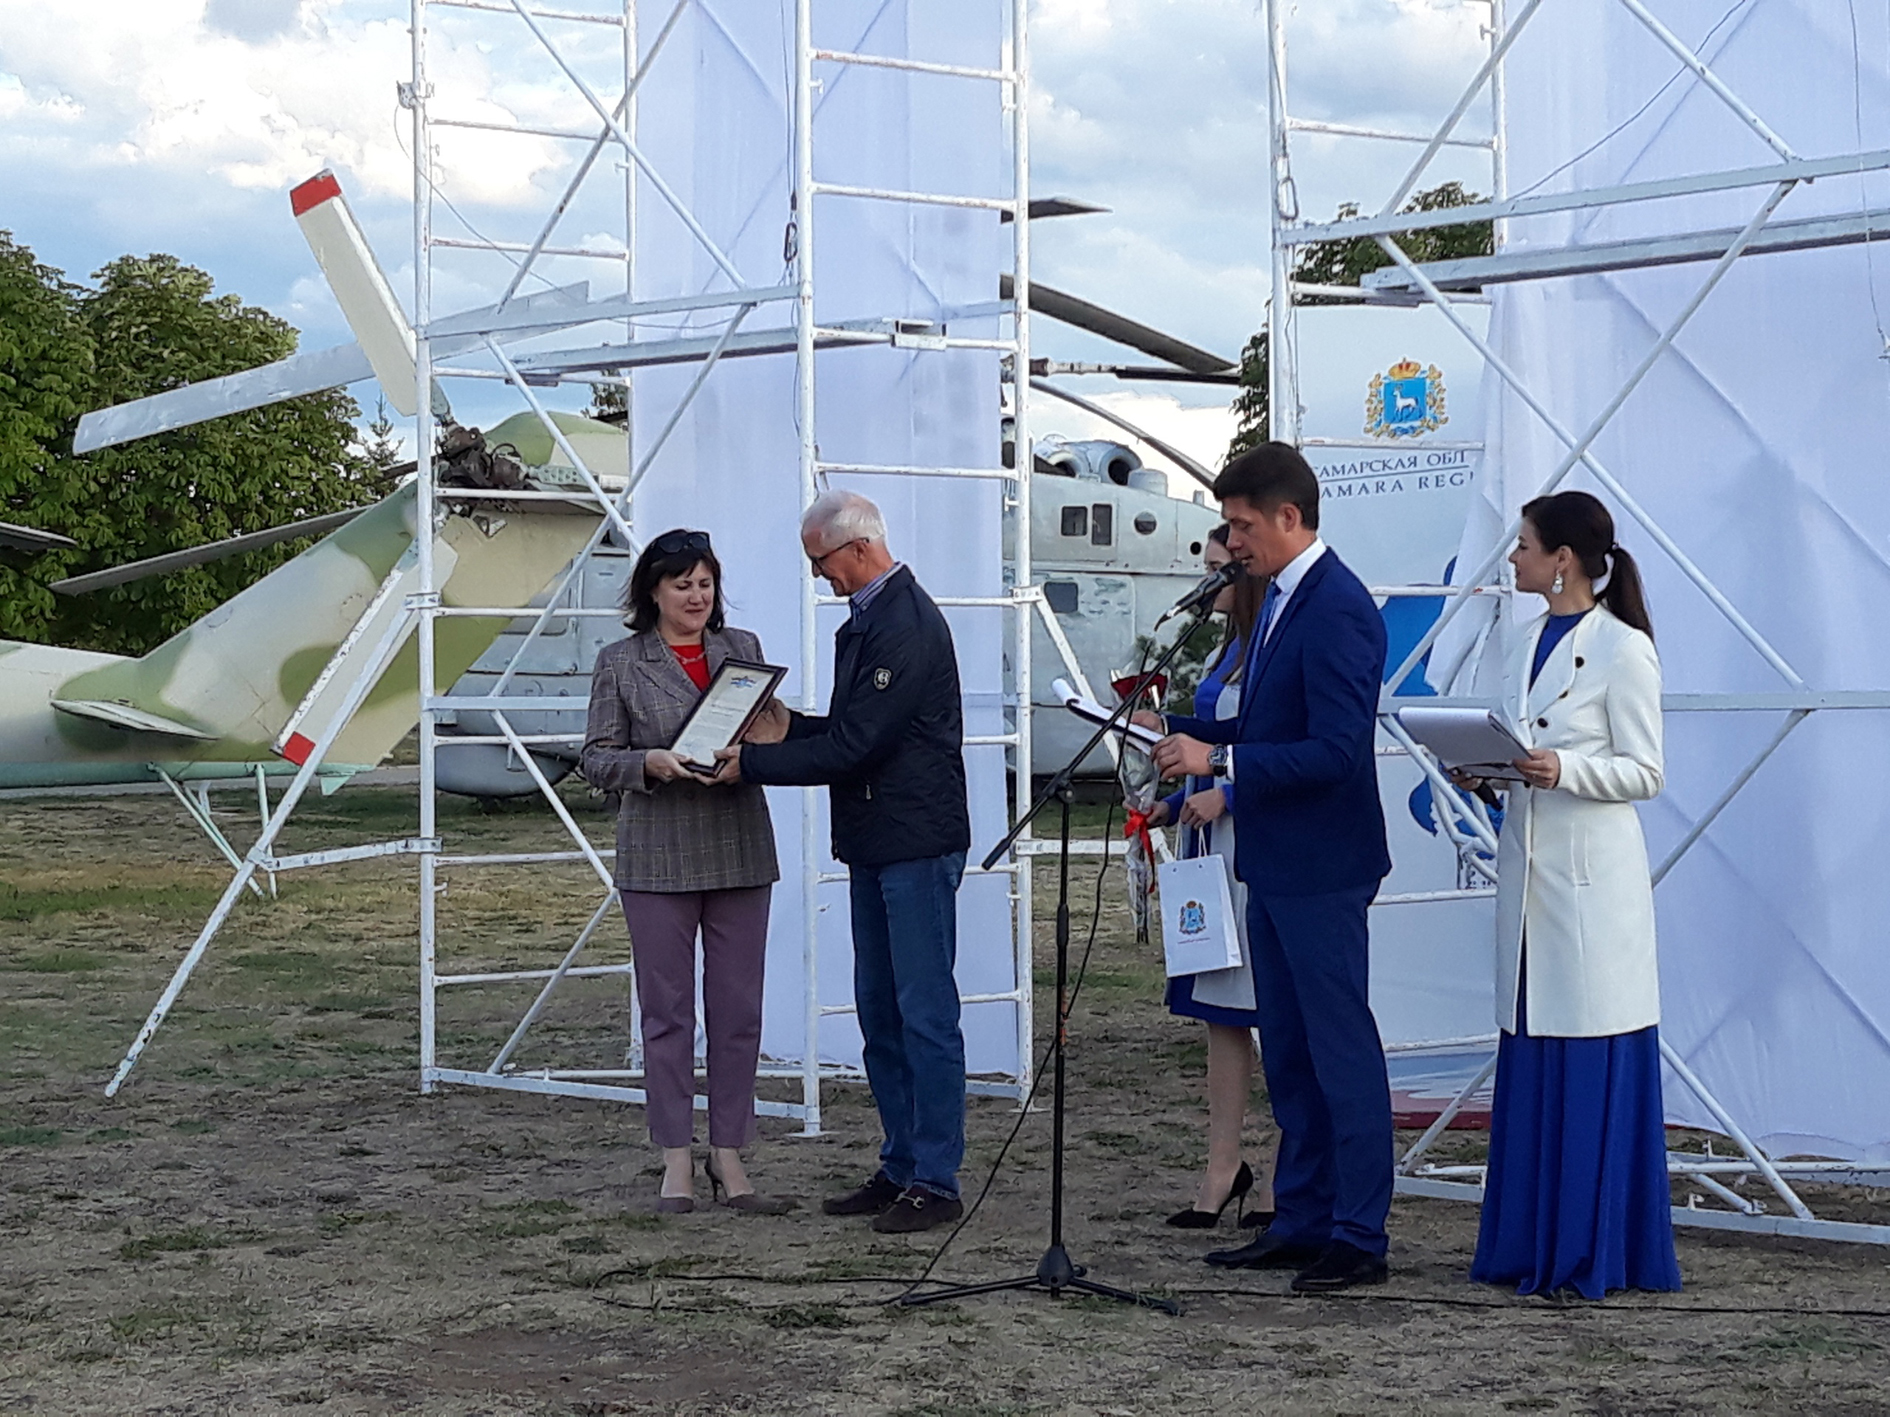 Церемония награждения в Парковом комплексе истории и техники имени Сахарова